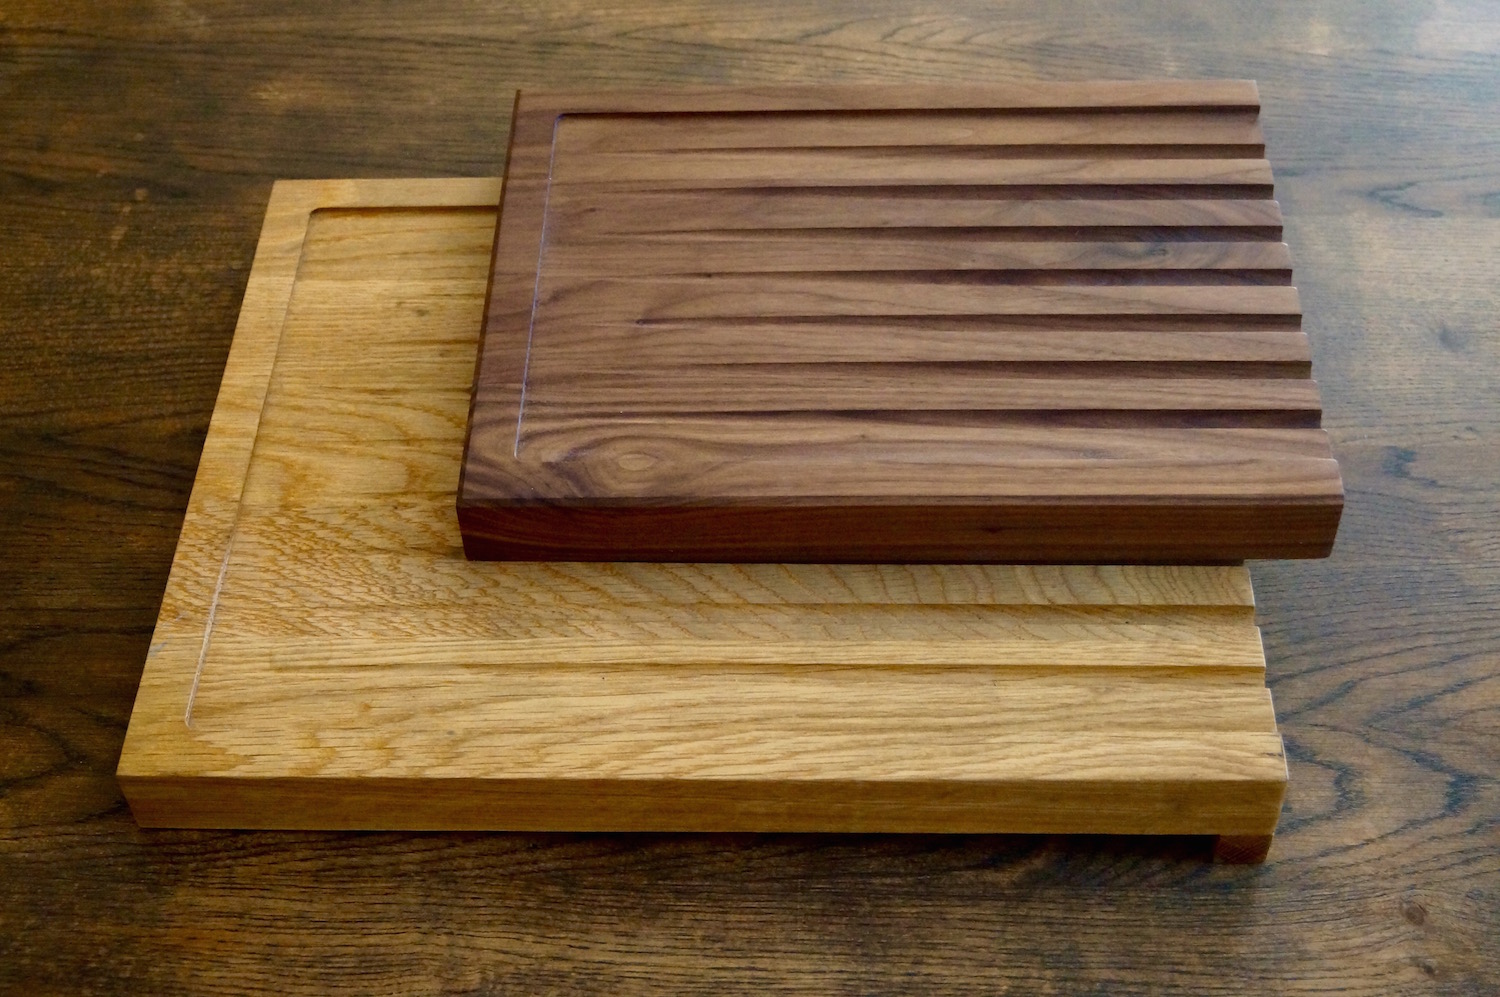 wooden-drainging-boards-USA-makemesomethingspecial.com